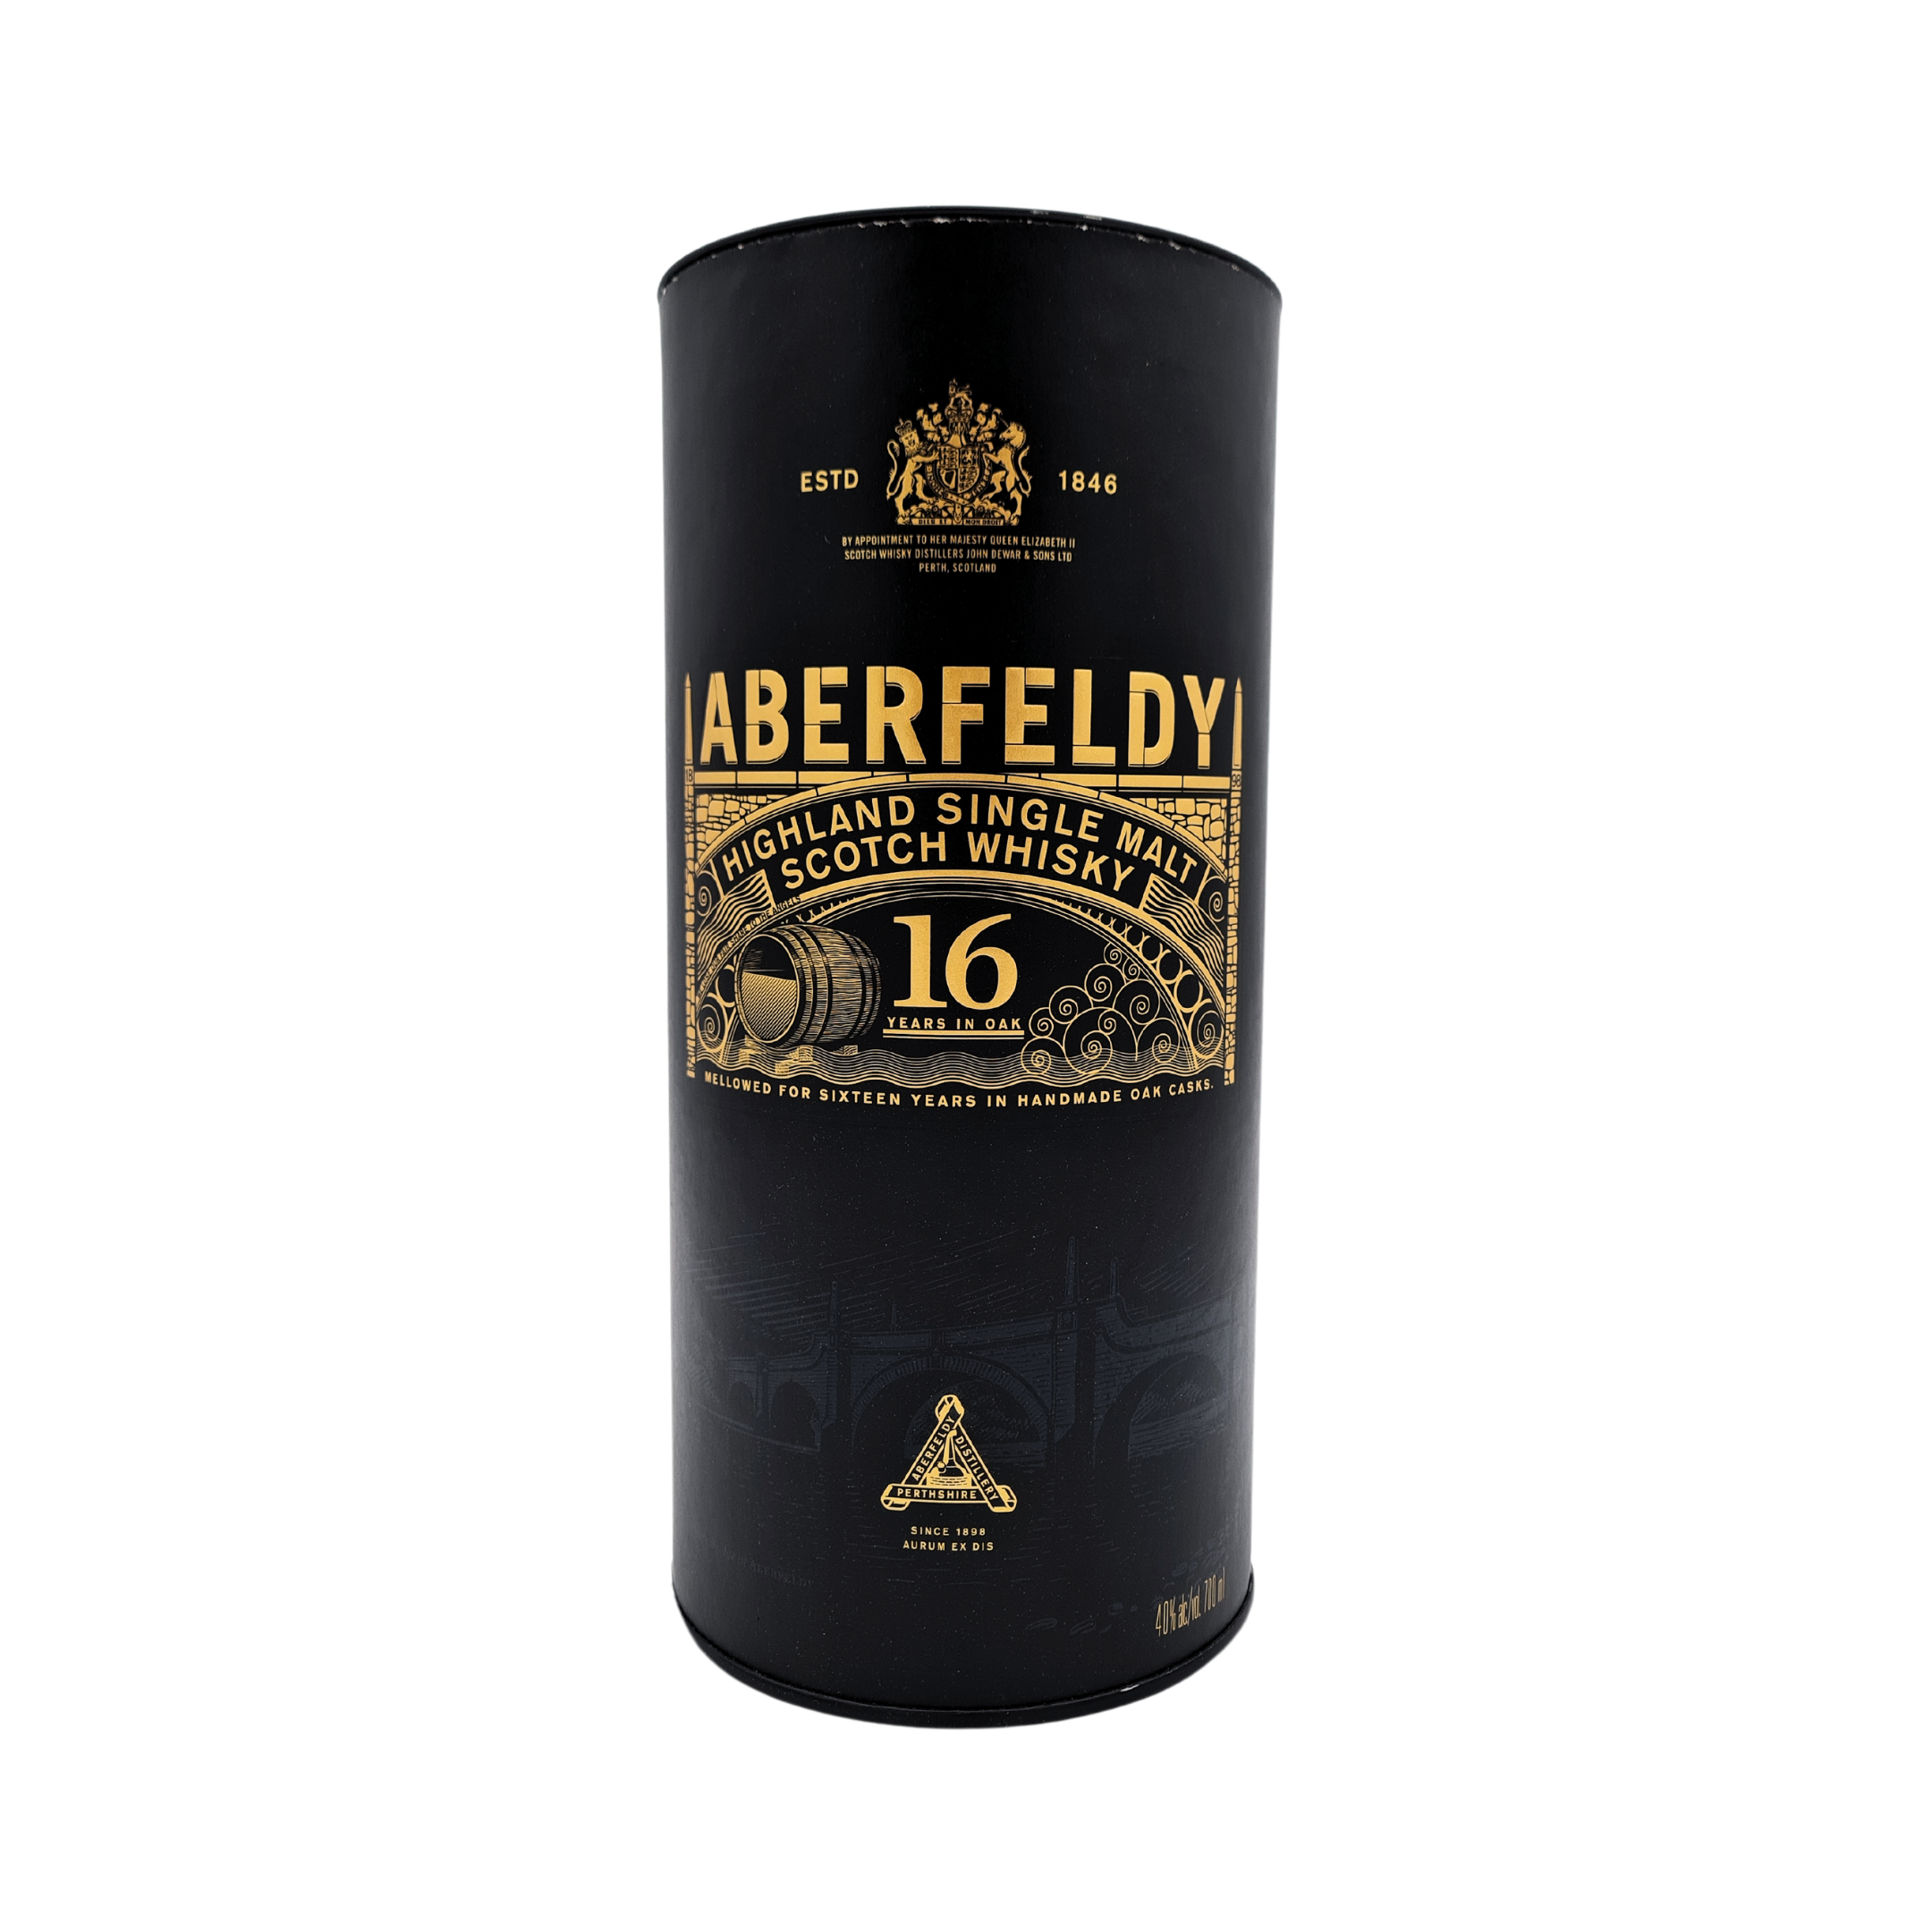 ABERFELDY - 16 yo Highland Single Malt Scotch Whisky